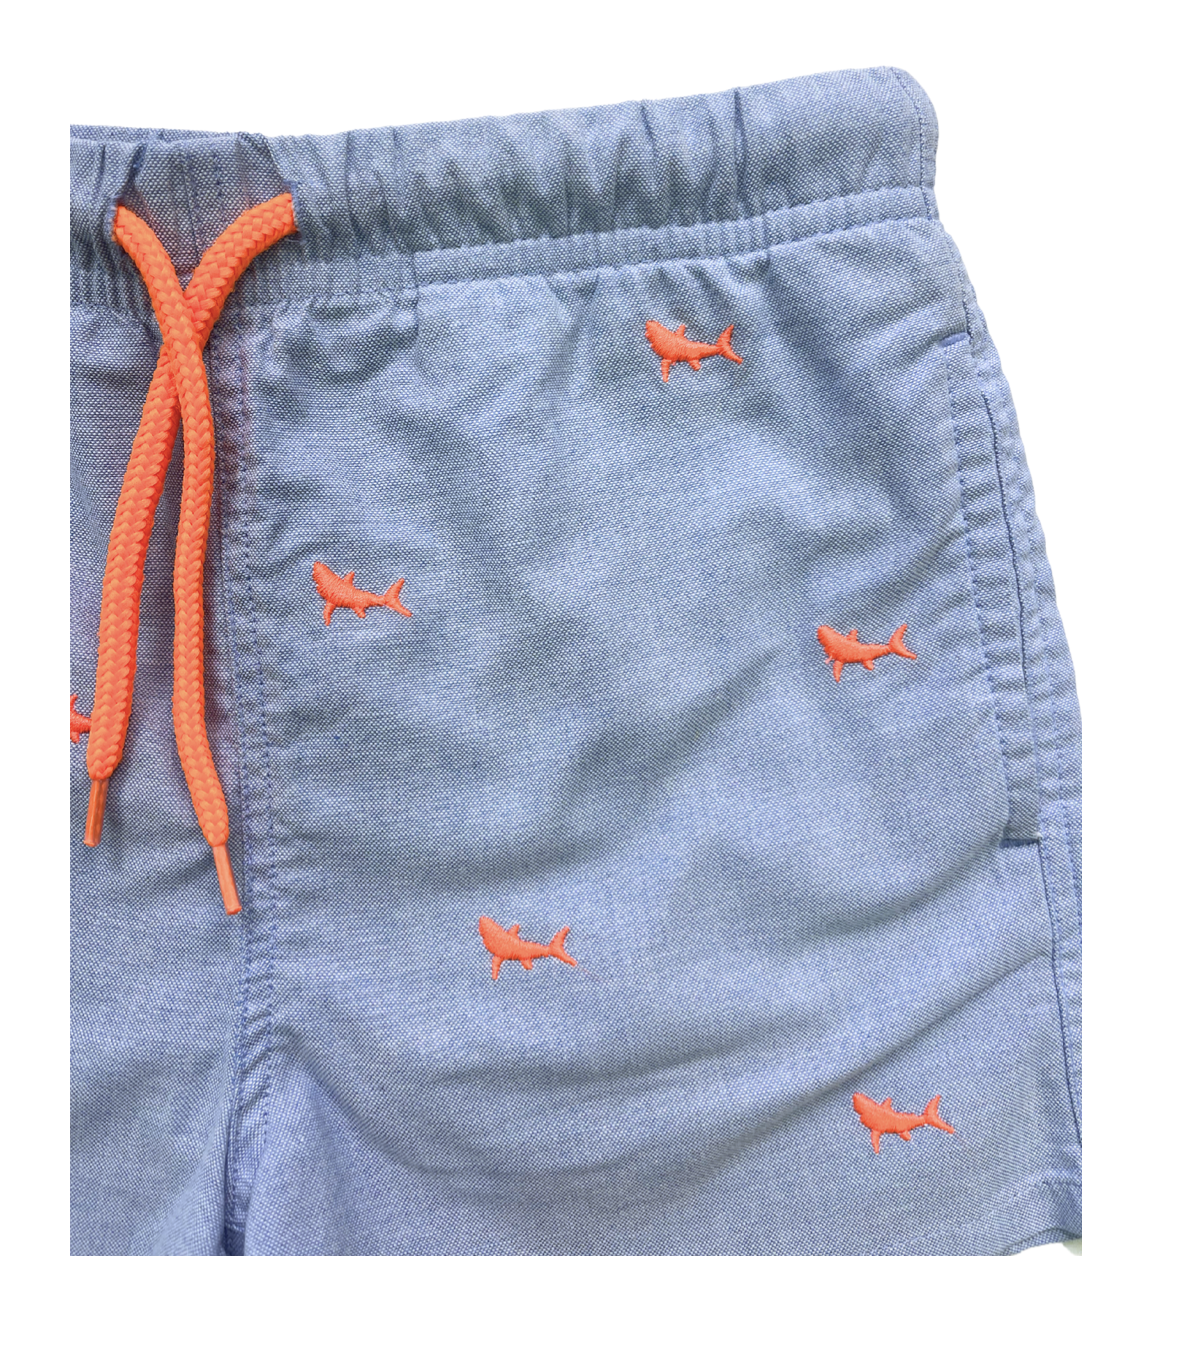 JACADI - Short de bain bleu clair requins oranges brodés - 4 ans